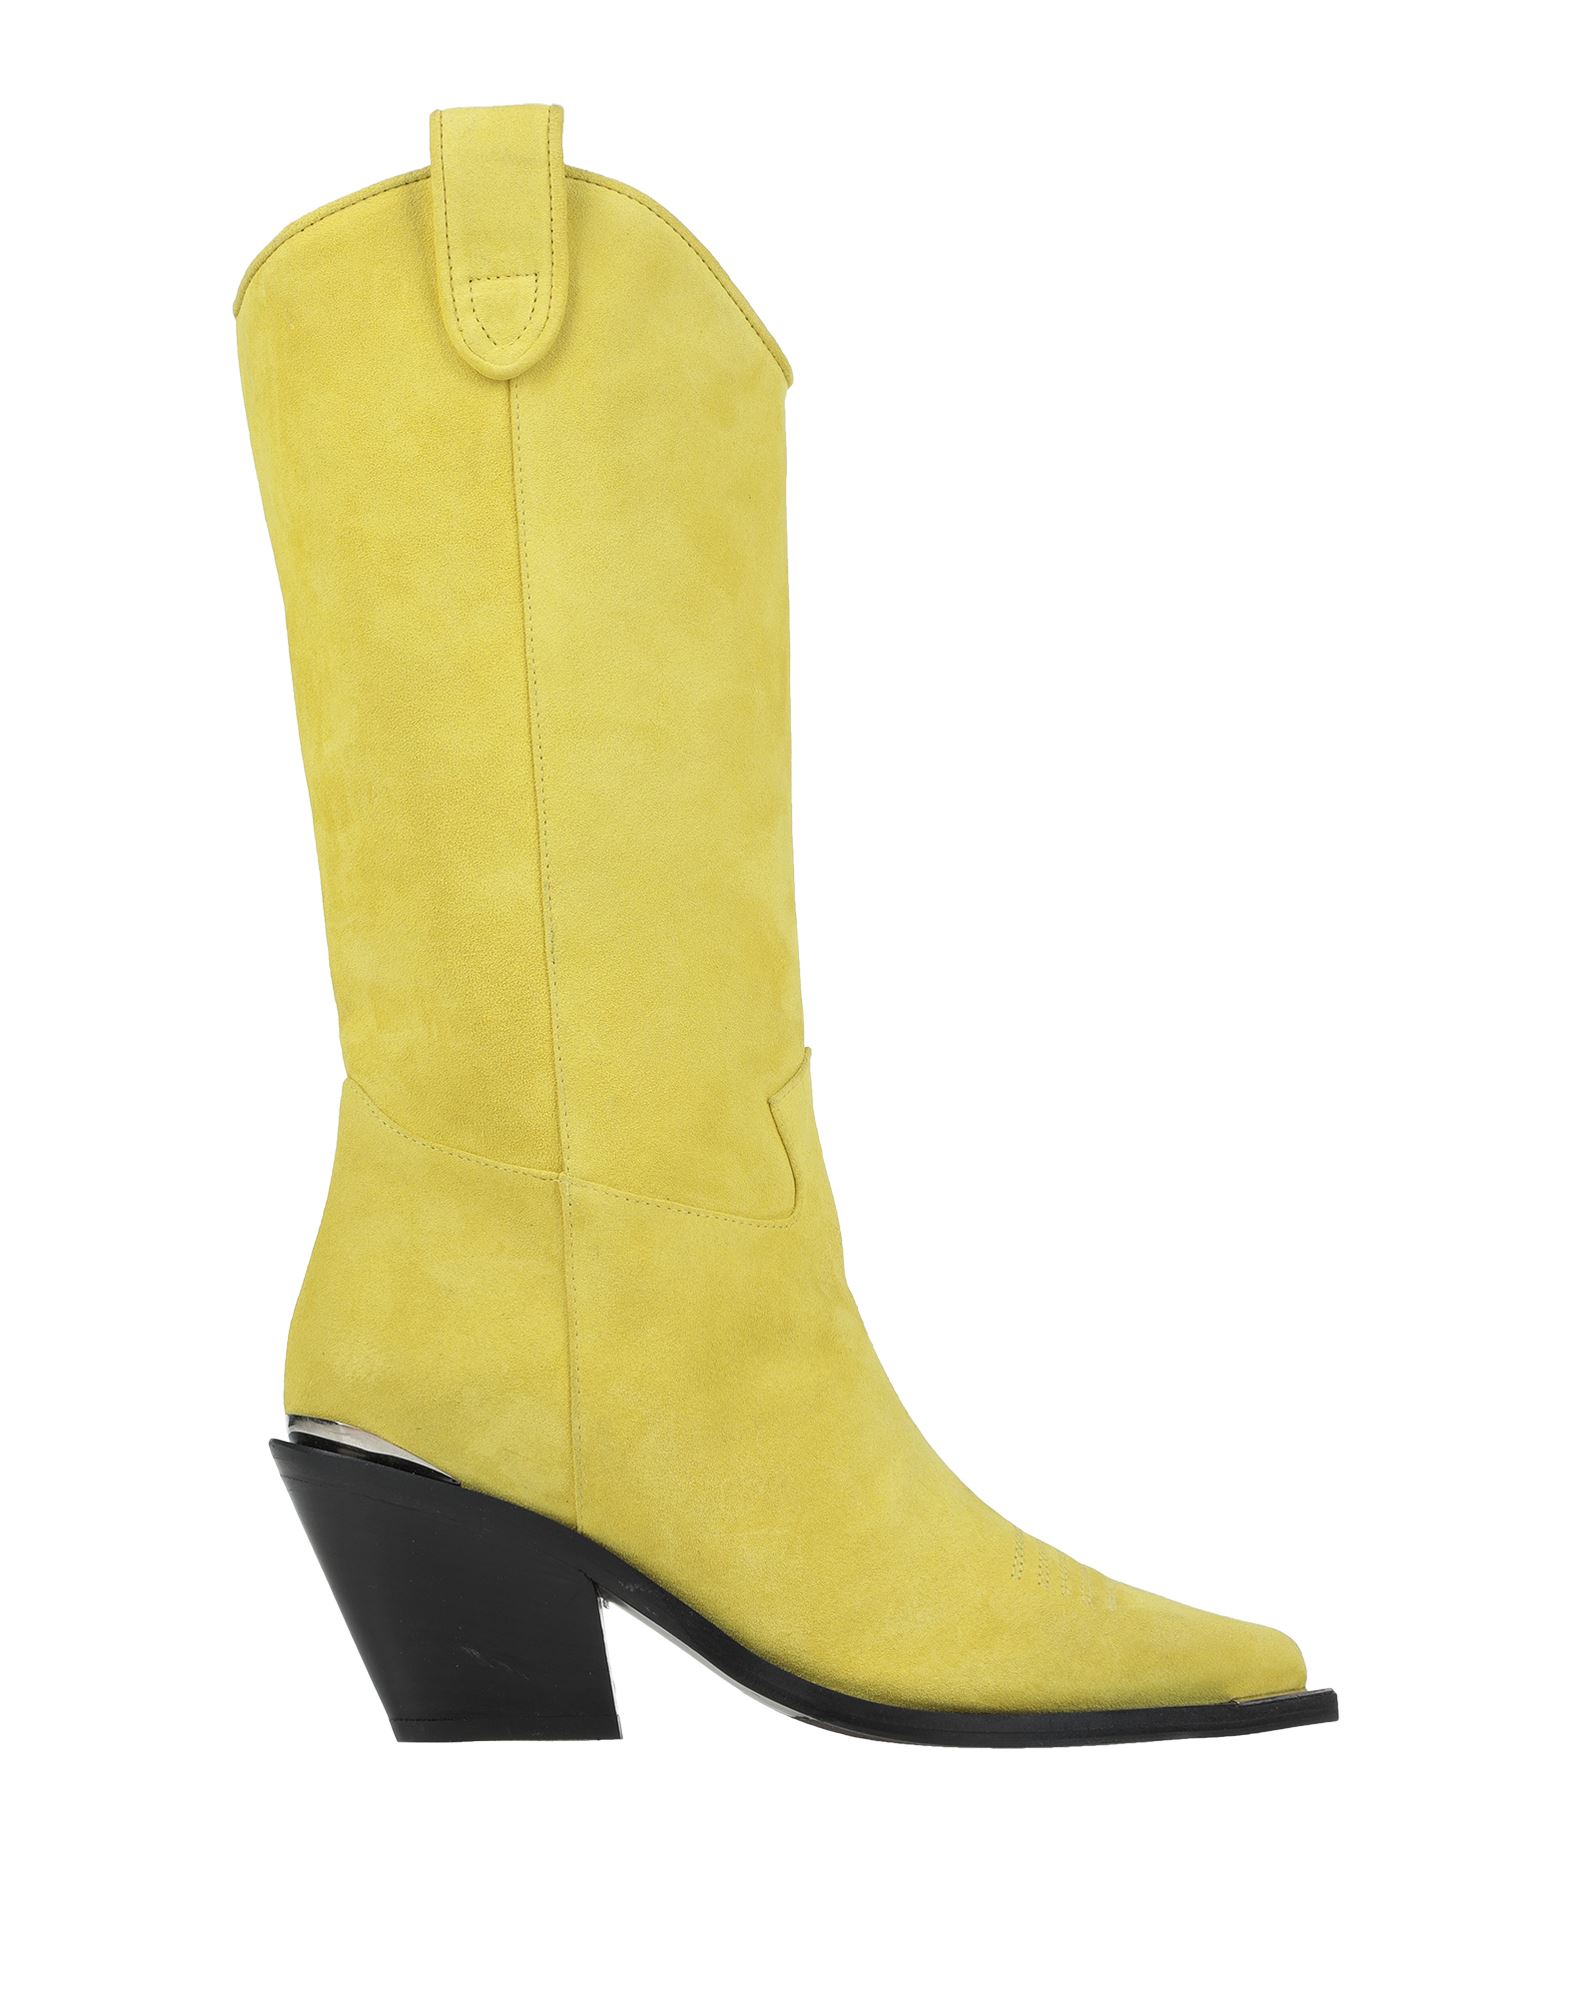 Aldo Castagna For Shabby Chic Knee Boots Yellow | ModeSens